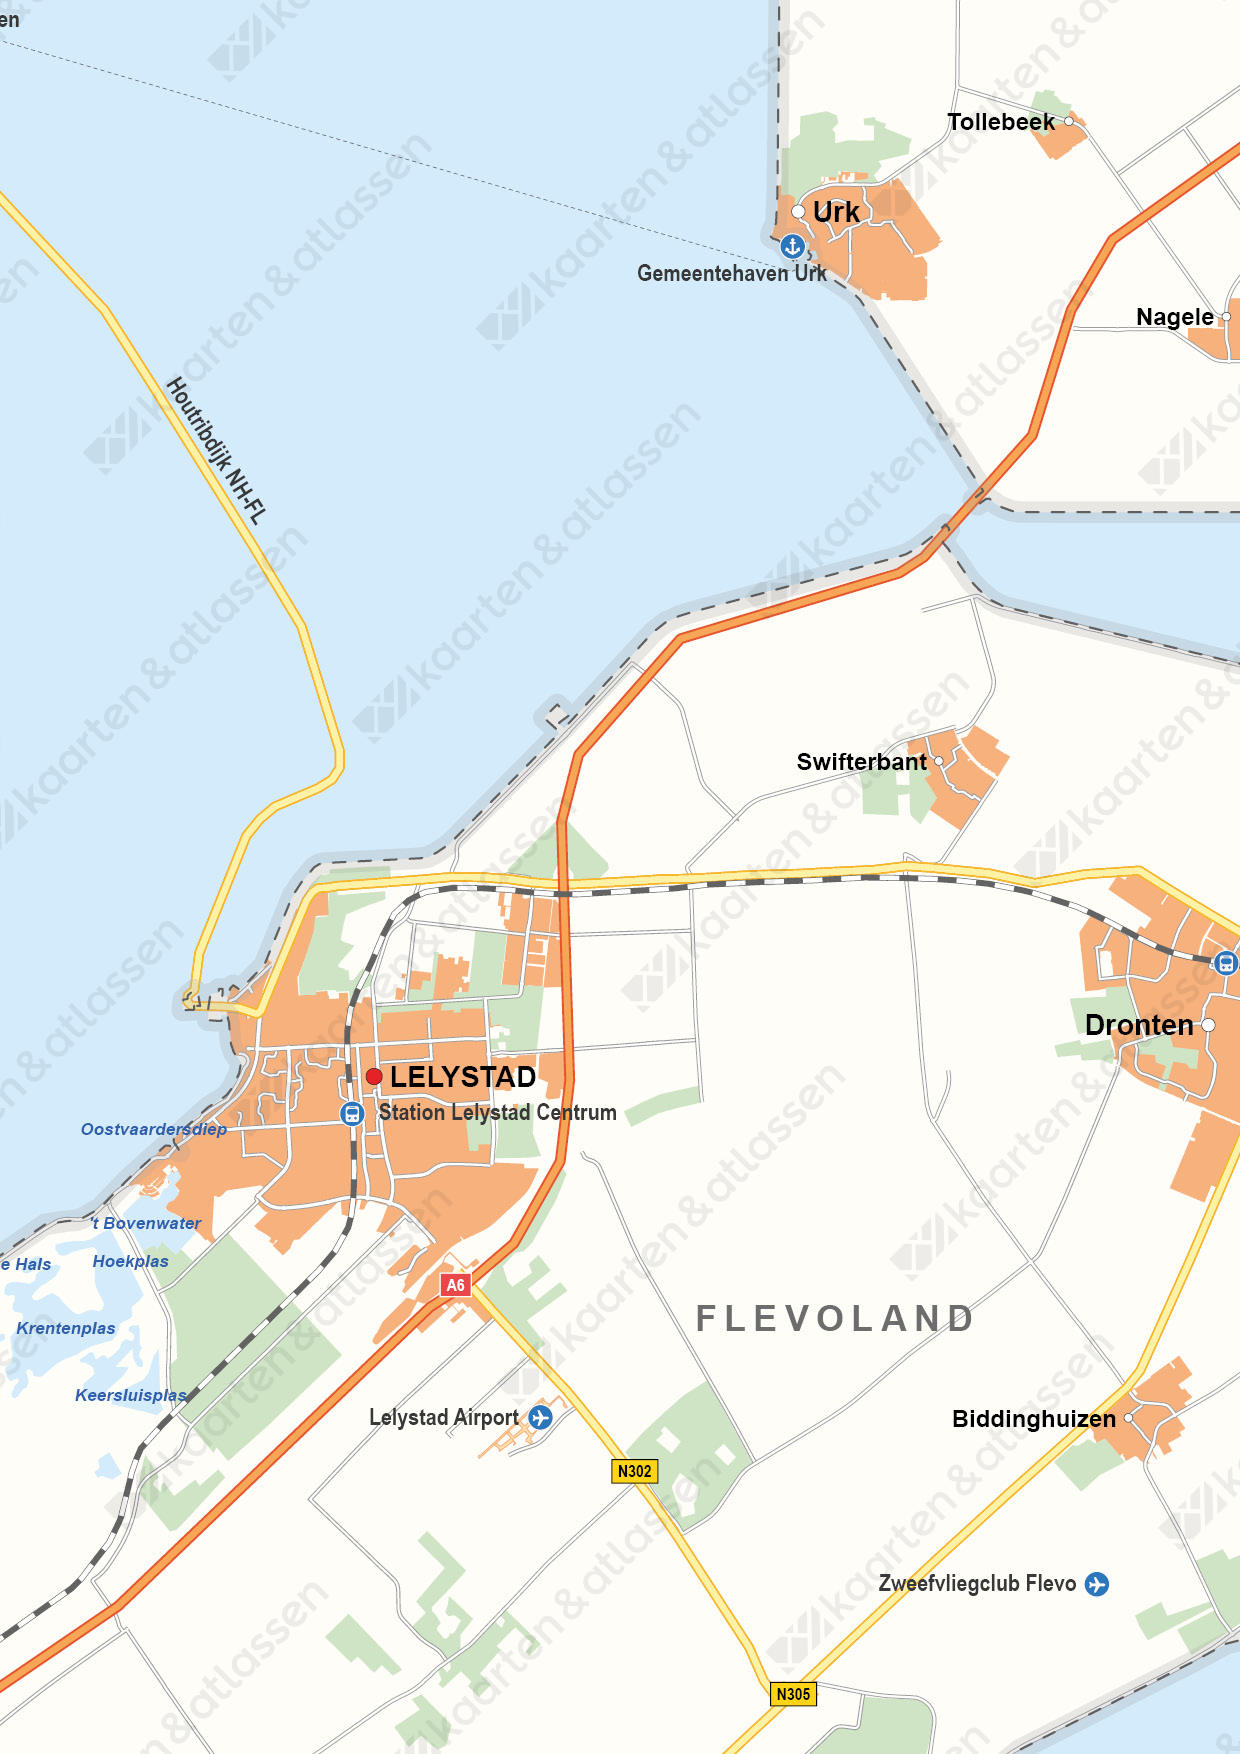 Flevoland Digitale Provinciekaart Staatkundig